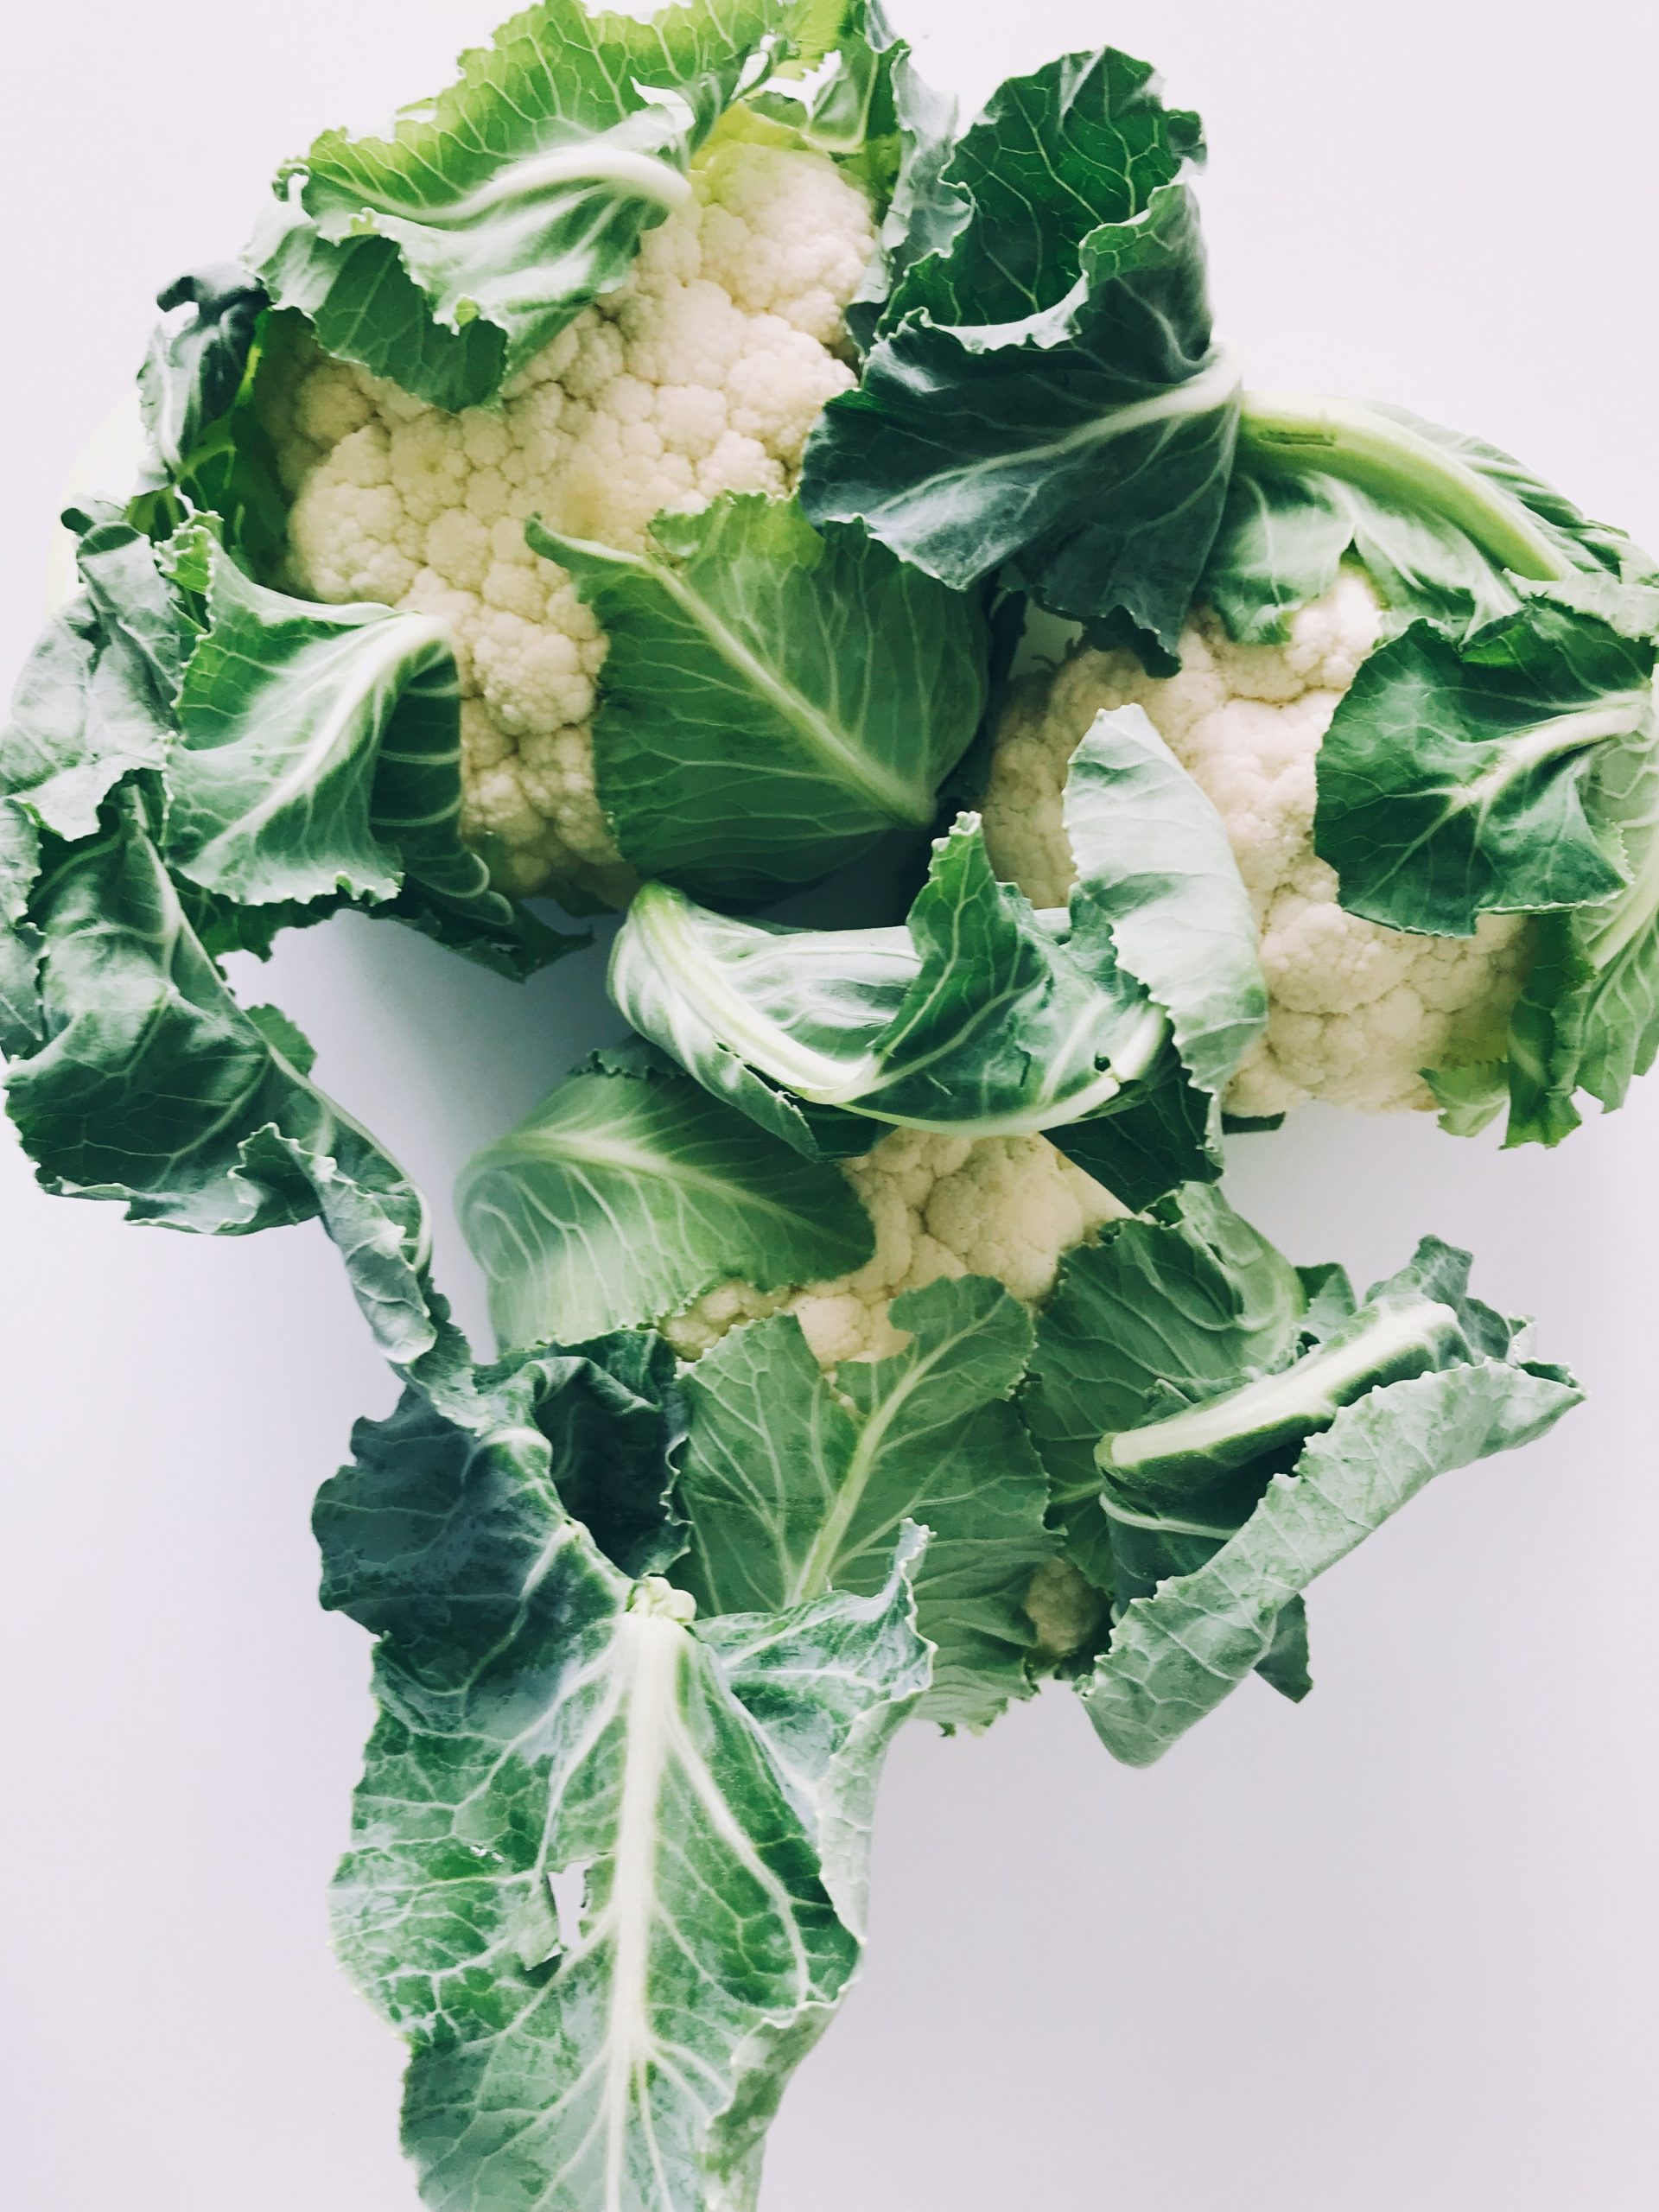 Does Cauliflower Regrow After Cutting?